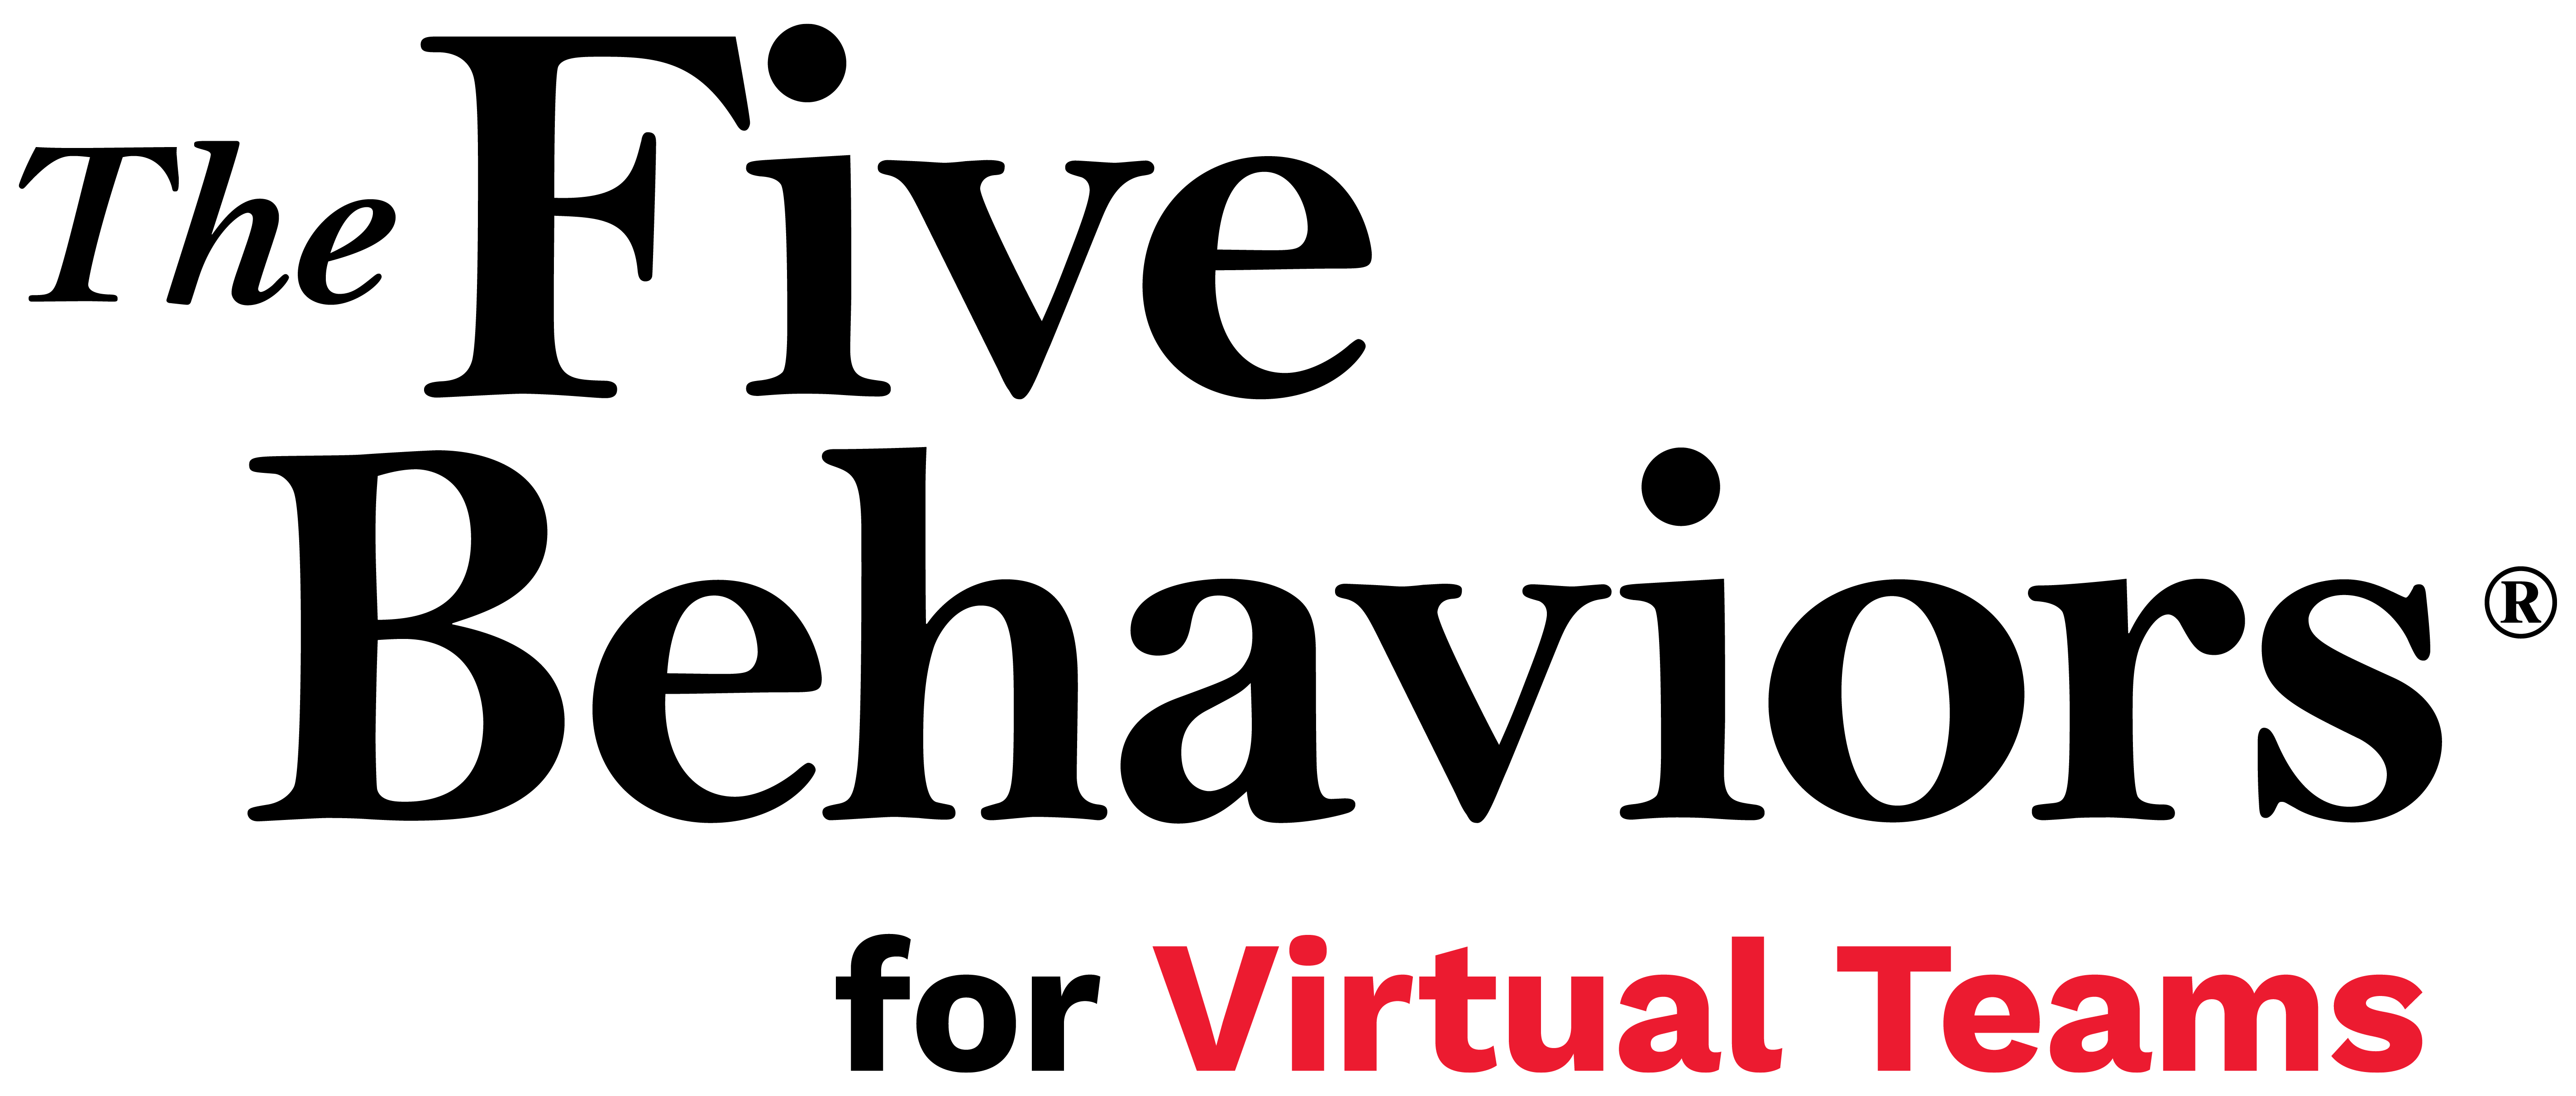 Five Behaviors for Virtual Teams Facilitator